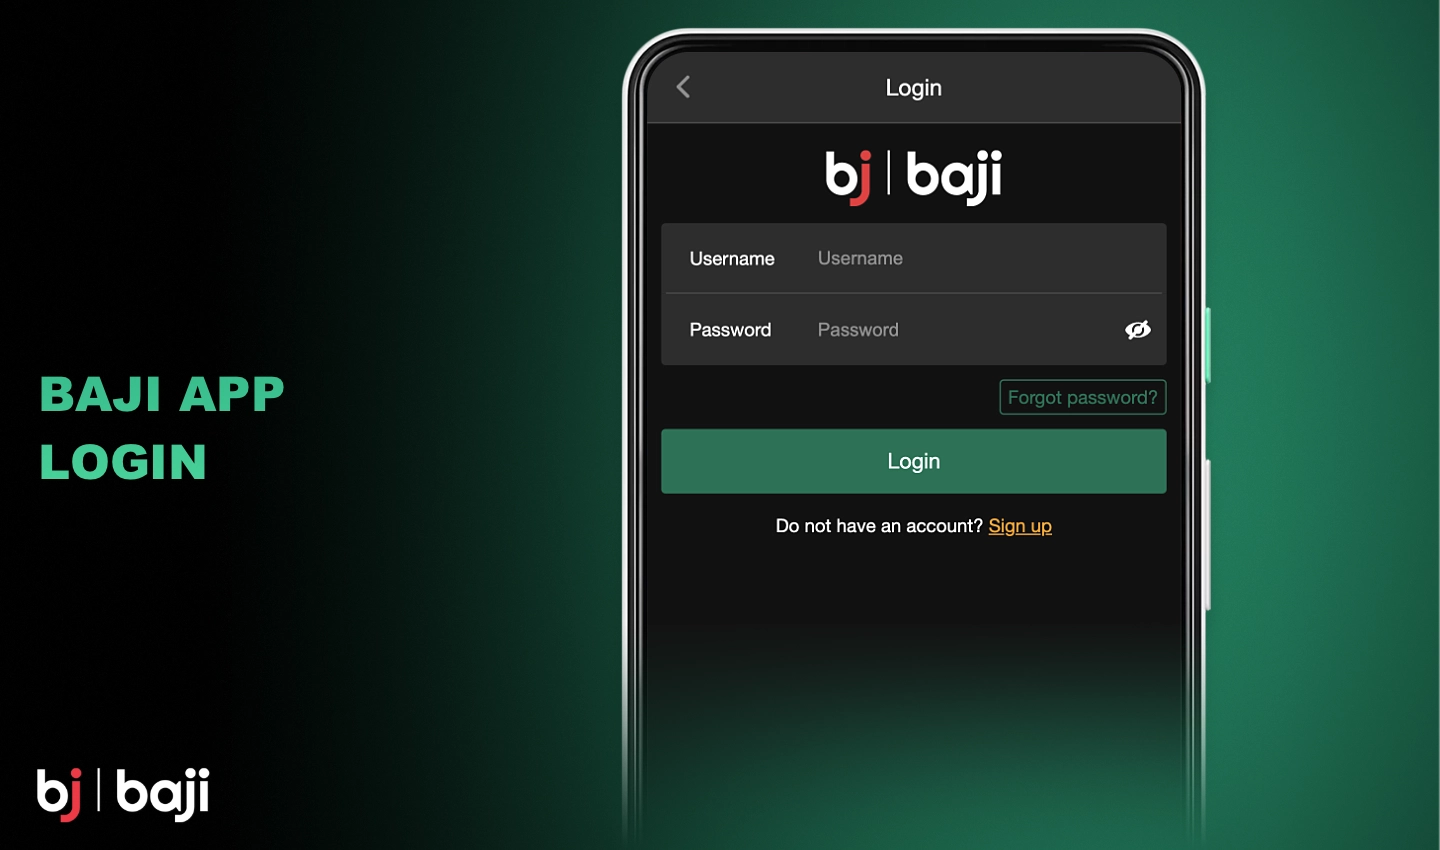 Baji ایپ میں اپنے ذاتی اکاؤنٹ میں لاگ ان کرنے کے لیے، آپ کو وہ تفصیلات استعمال کرنا ہوں گی جو آپ نے اپنا اکاؤنٹ رجسٹر کرتے وقت فراہم کی تھیں۔